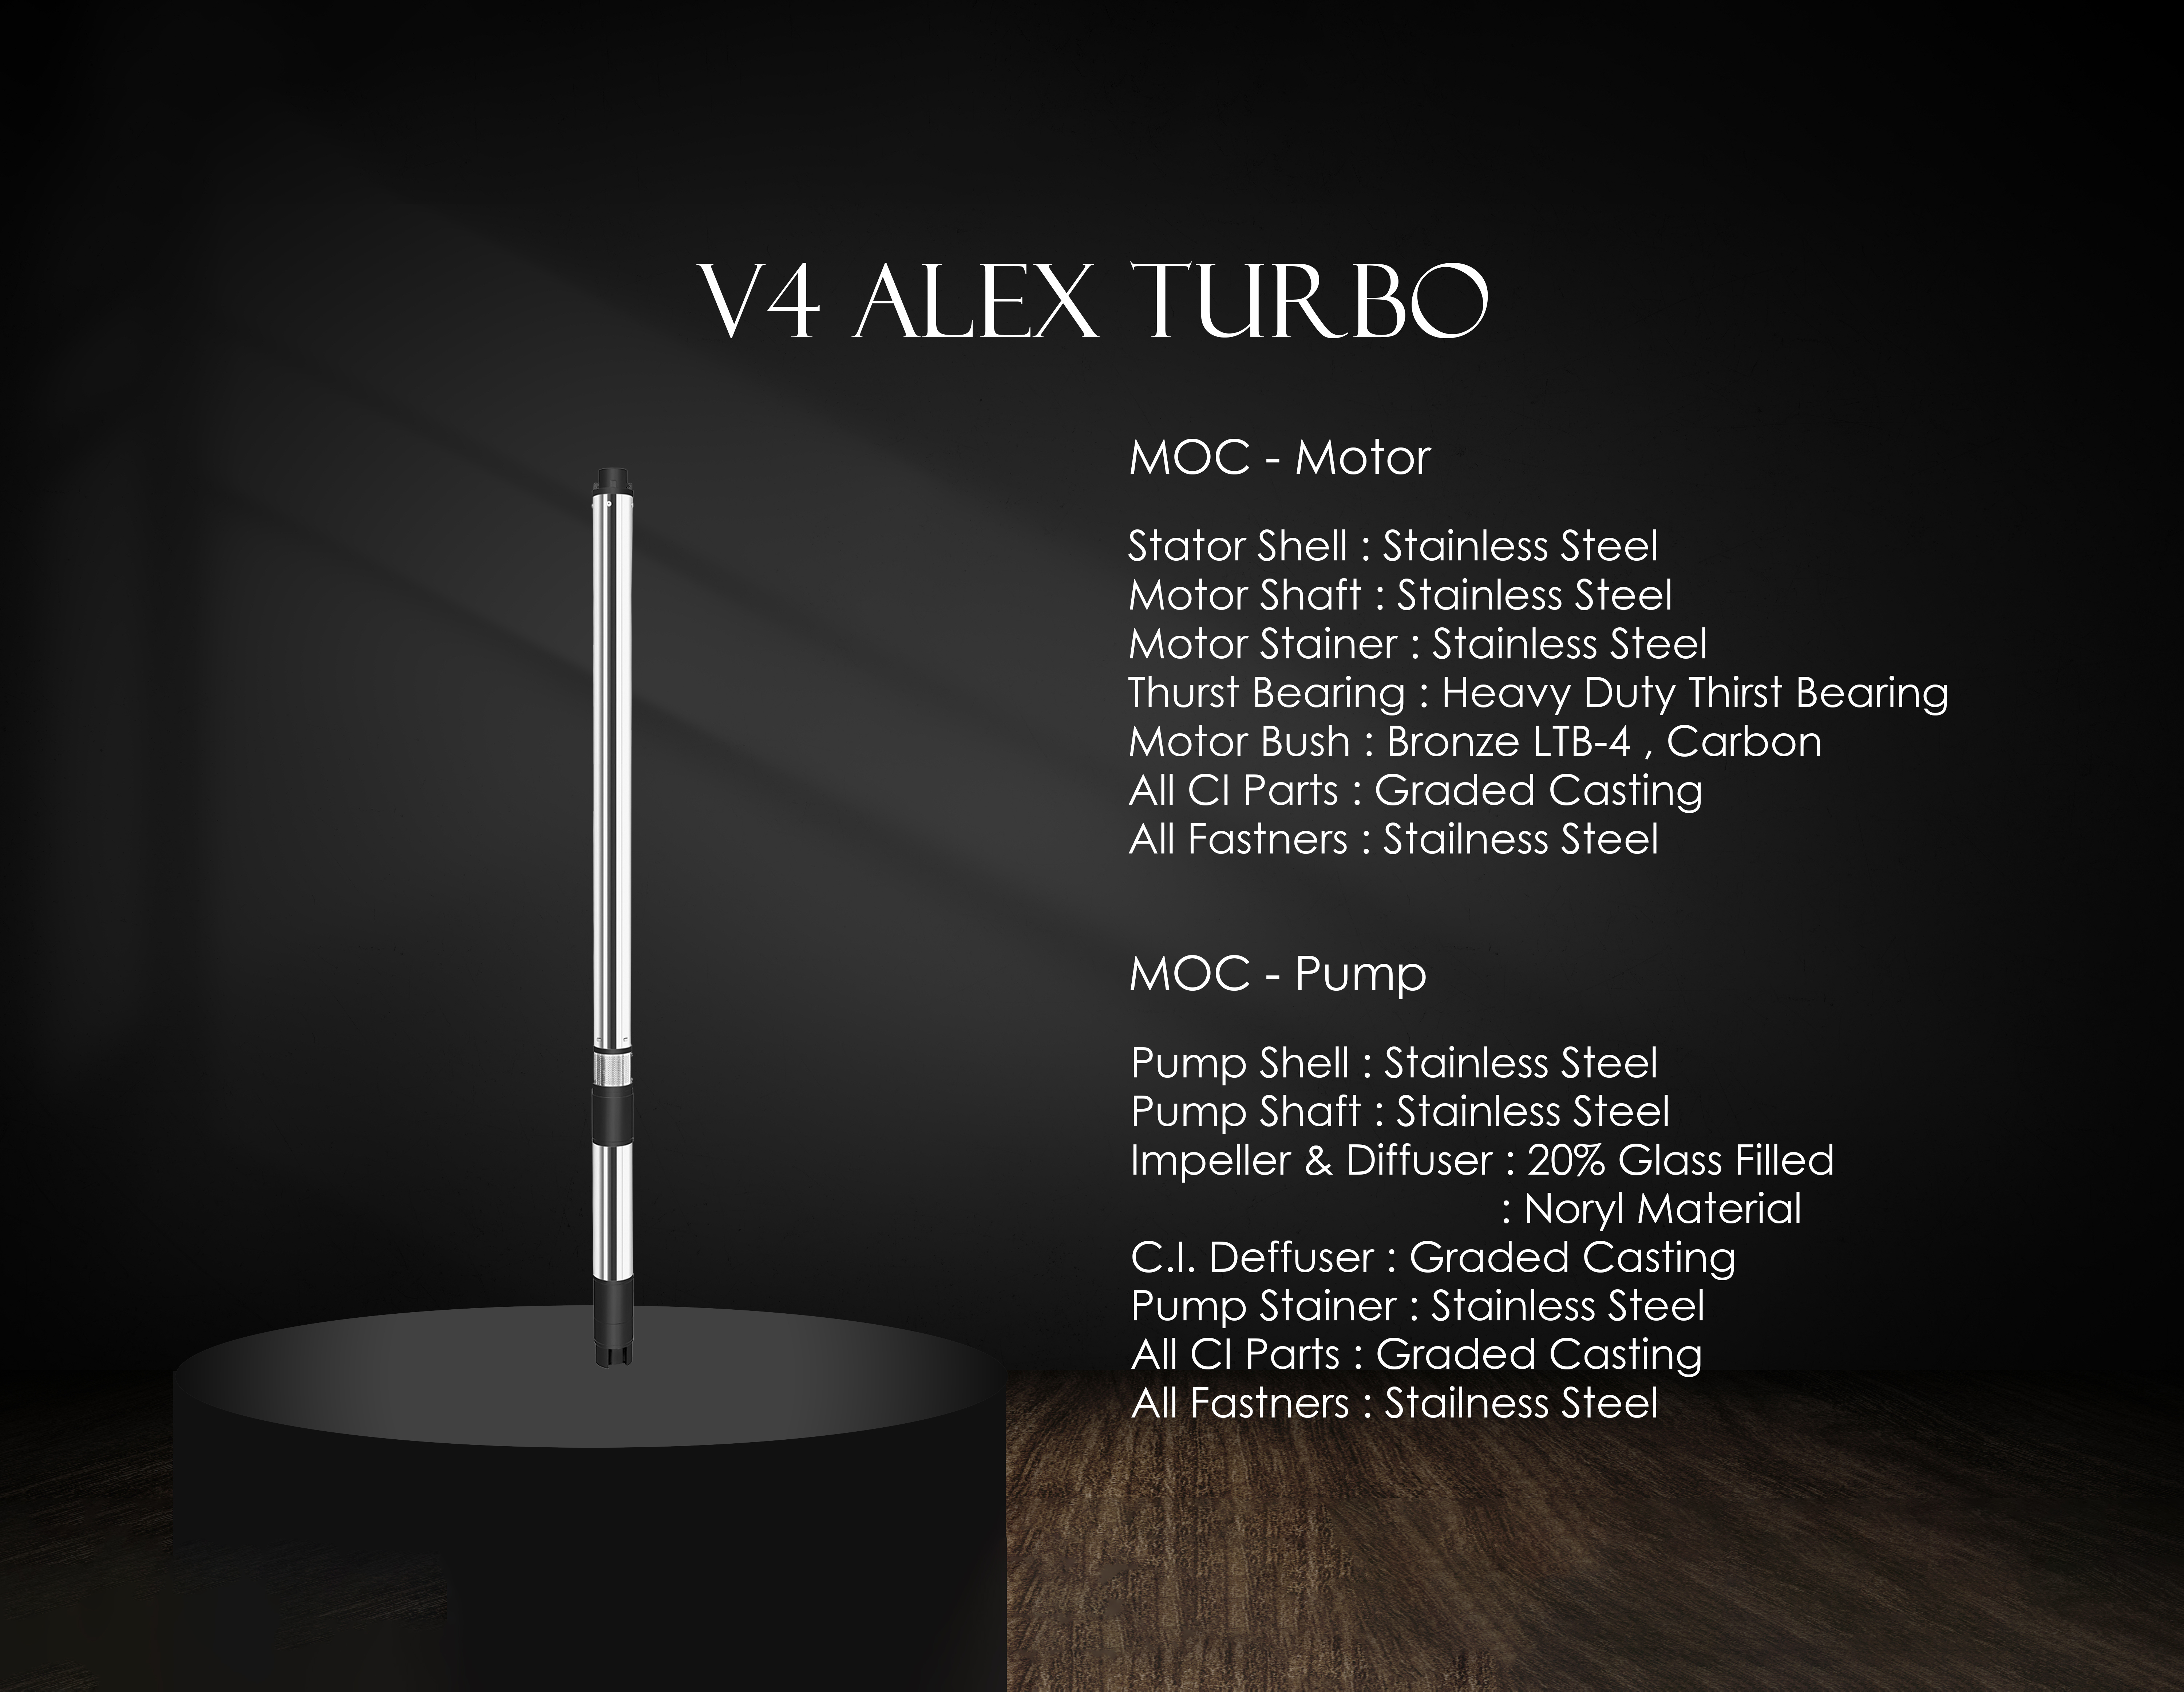 V4 1.5 HP X 25 STG Alex Turbo (Out-1.25") (S/T) Prithvi